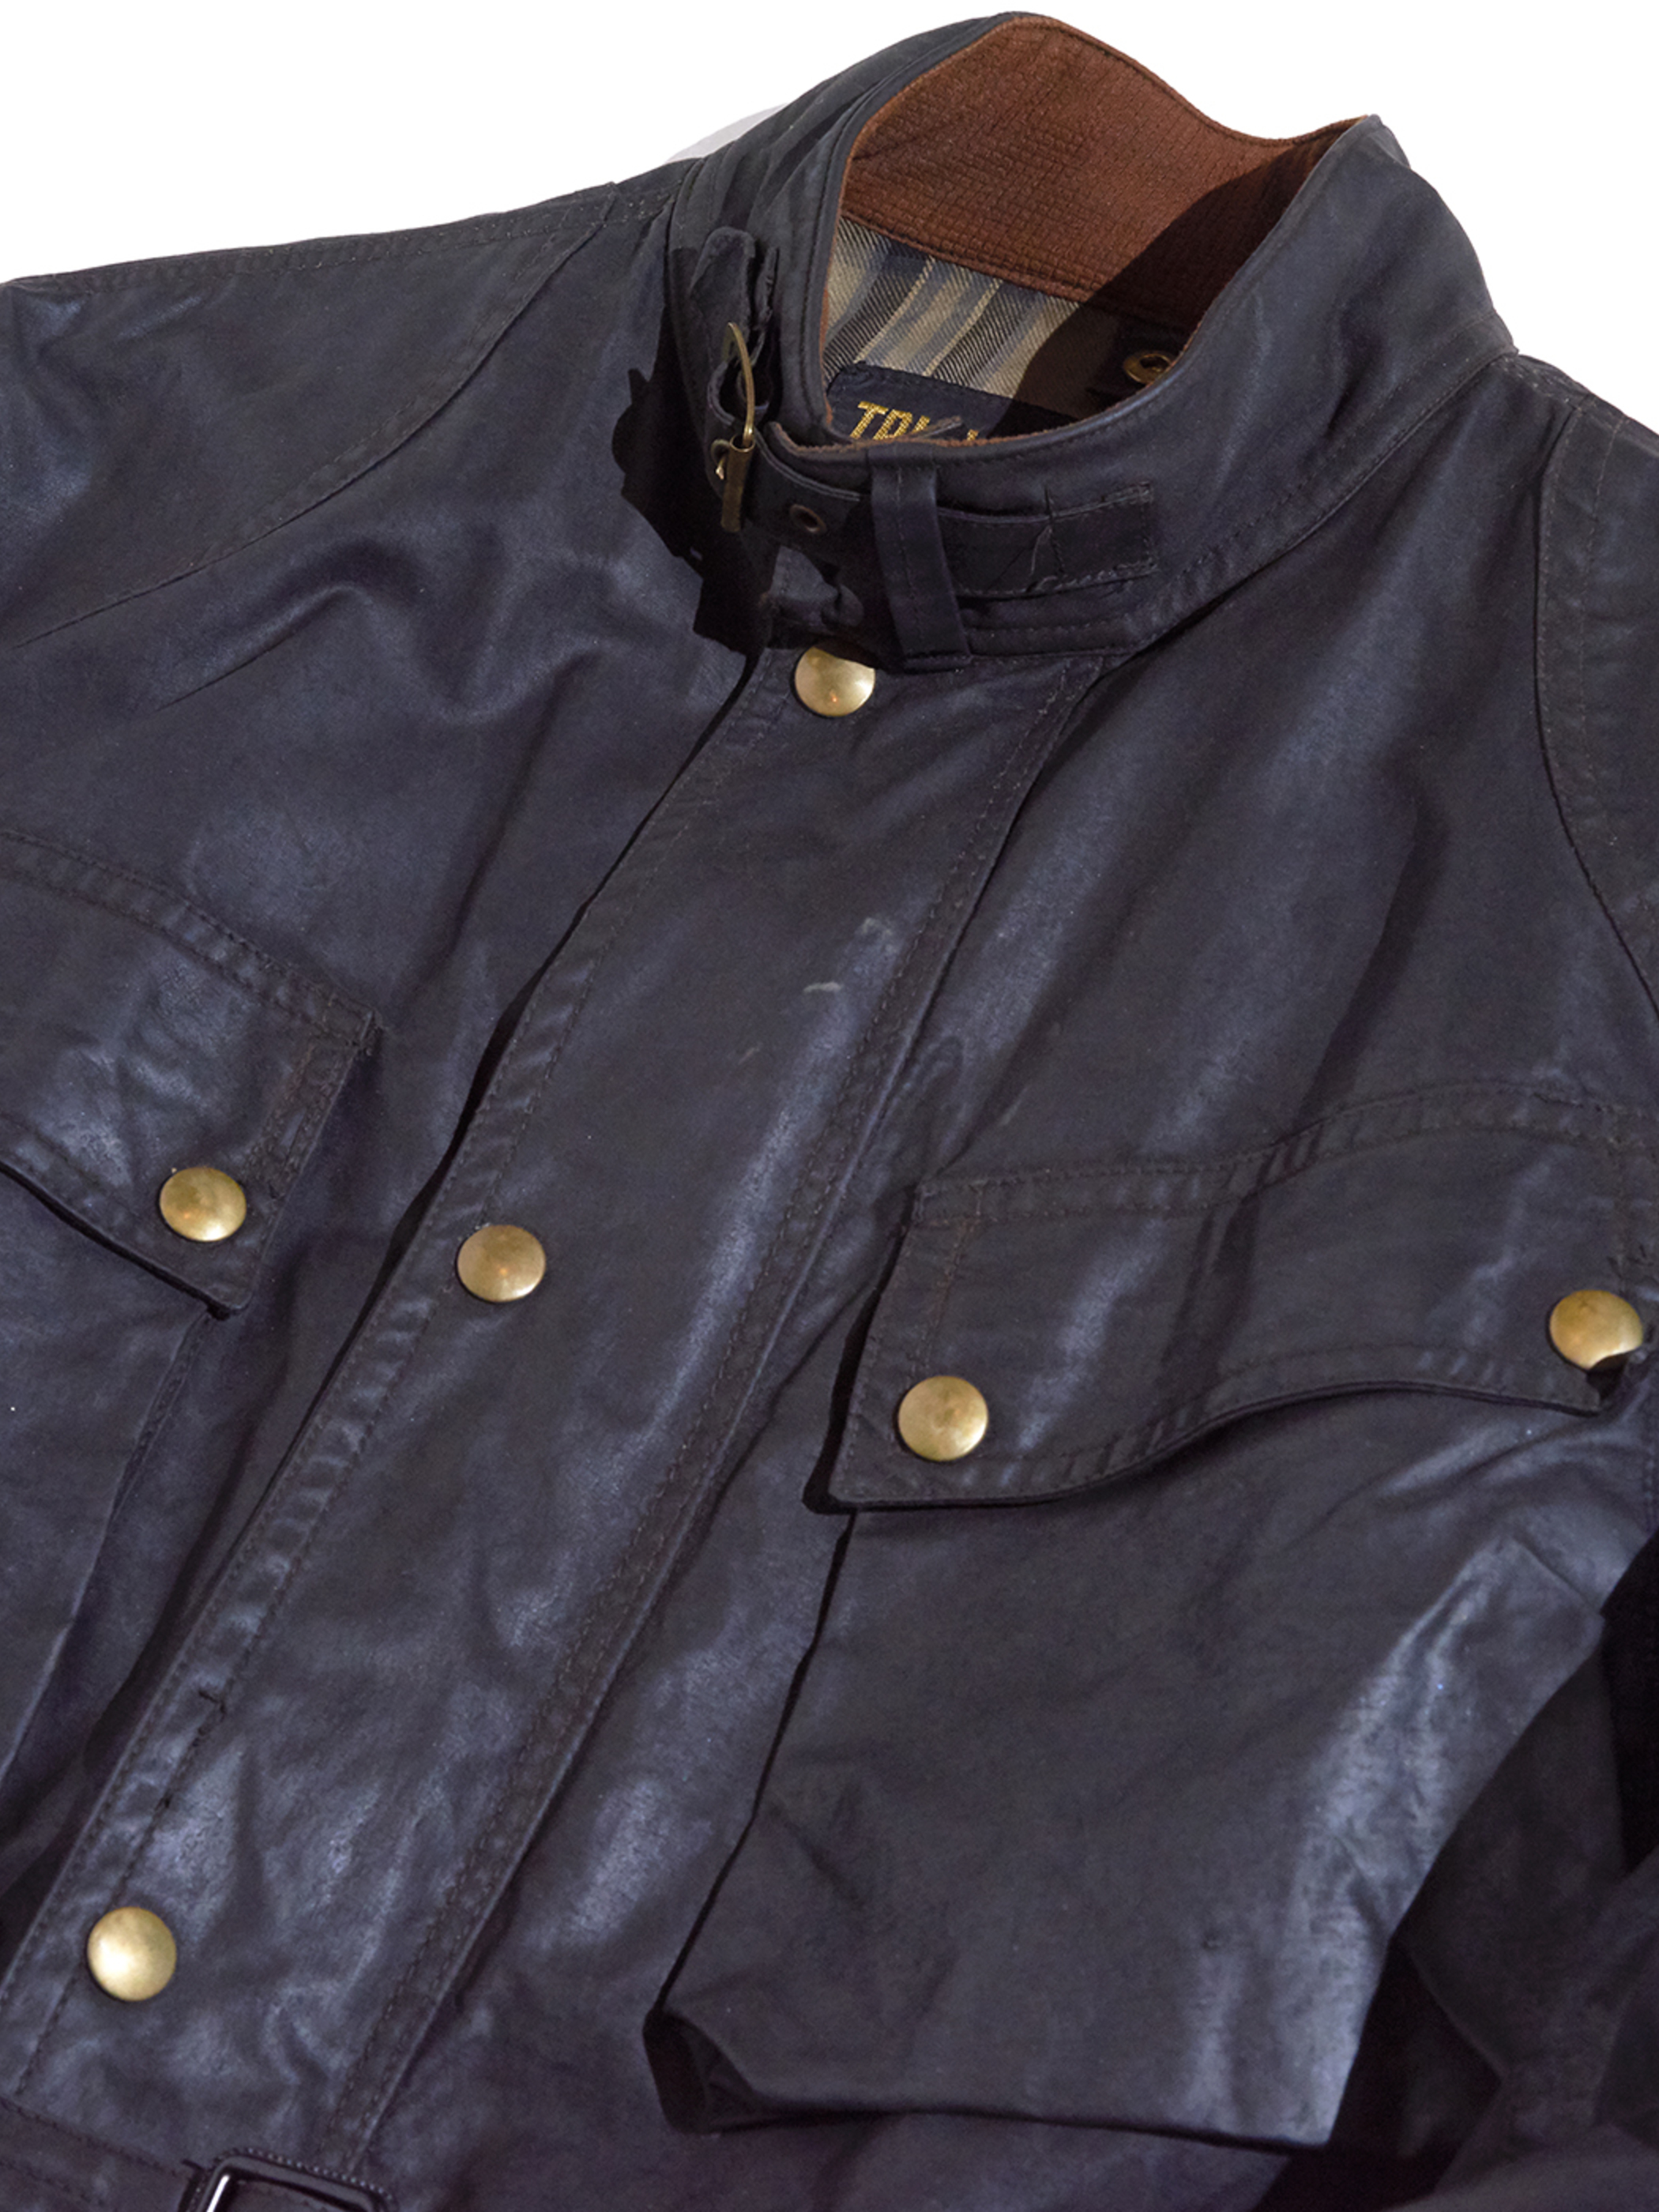 belstaff trialmaster jacket sale